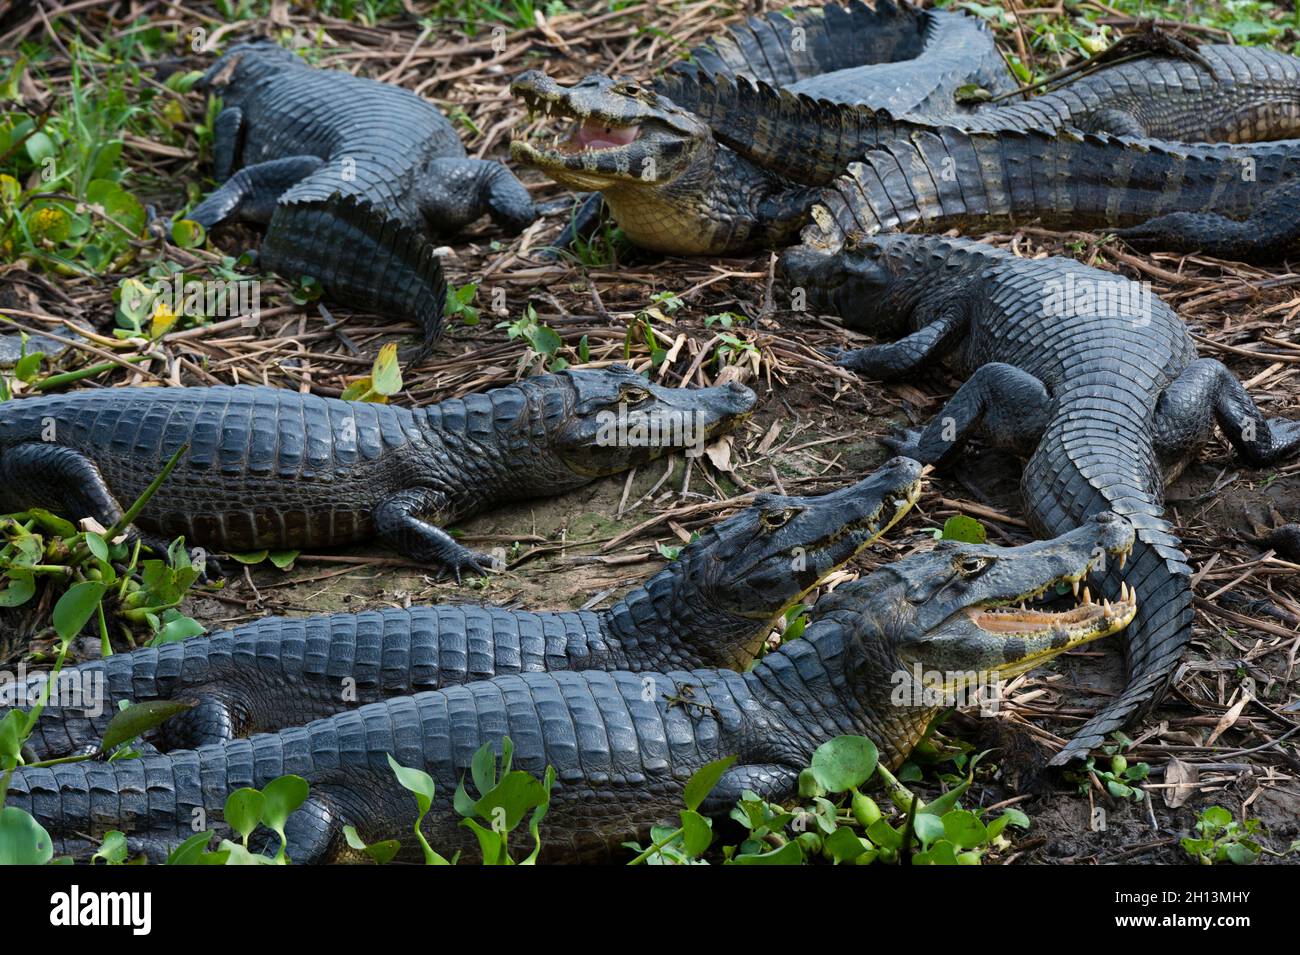 Yacare caimans, Caiman crocodylus yacare, am Ufer des Flusses Cuiaba. Mato Grosso Do Sul, Brasilien. Stockfoto